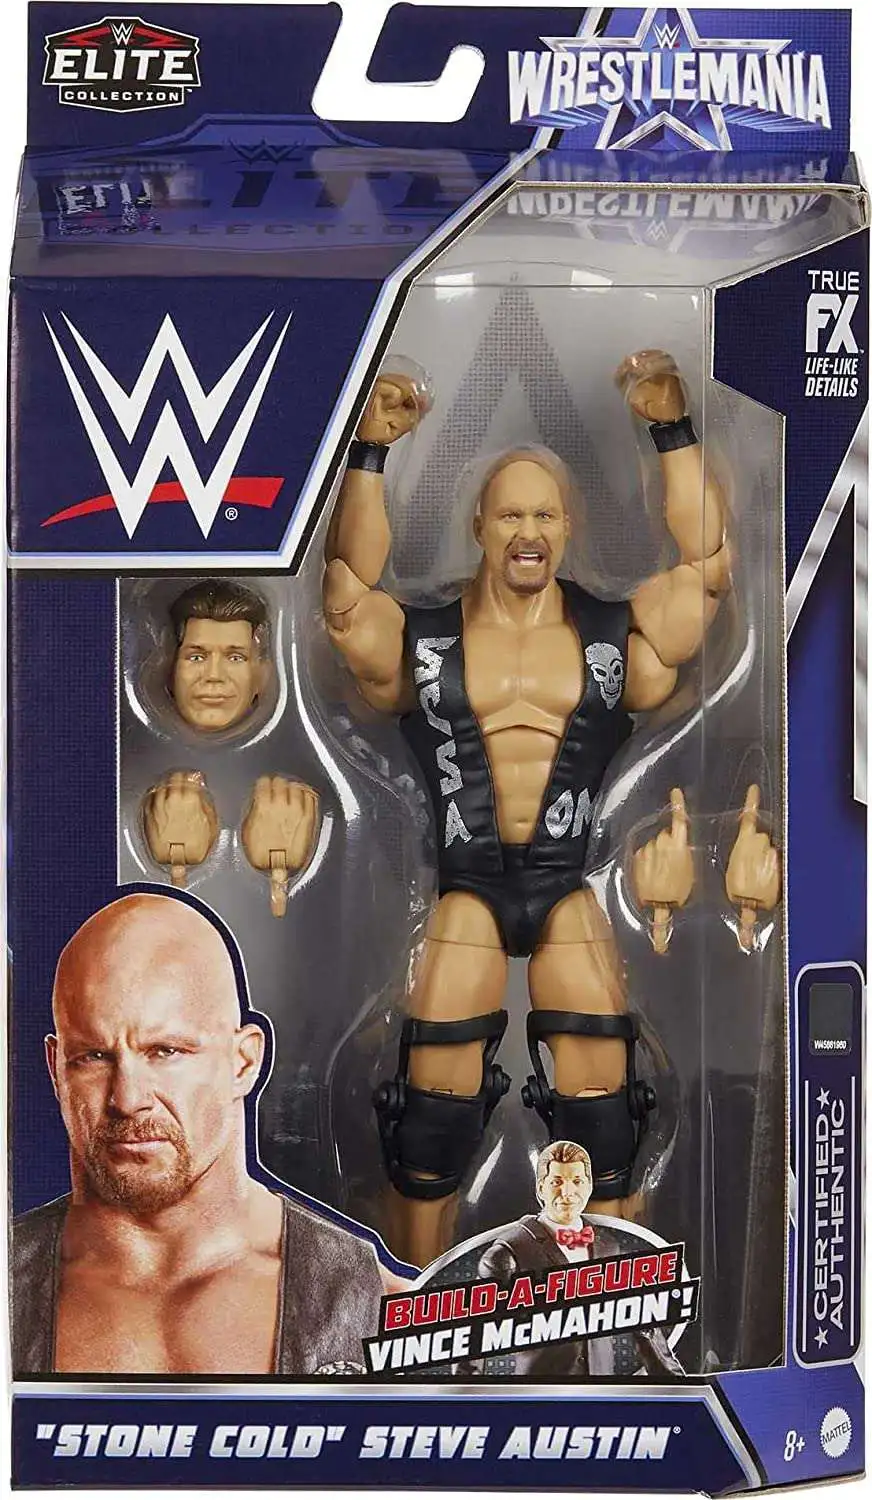 WWE Wrestling Elite Collection WrestleMania 